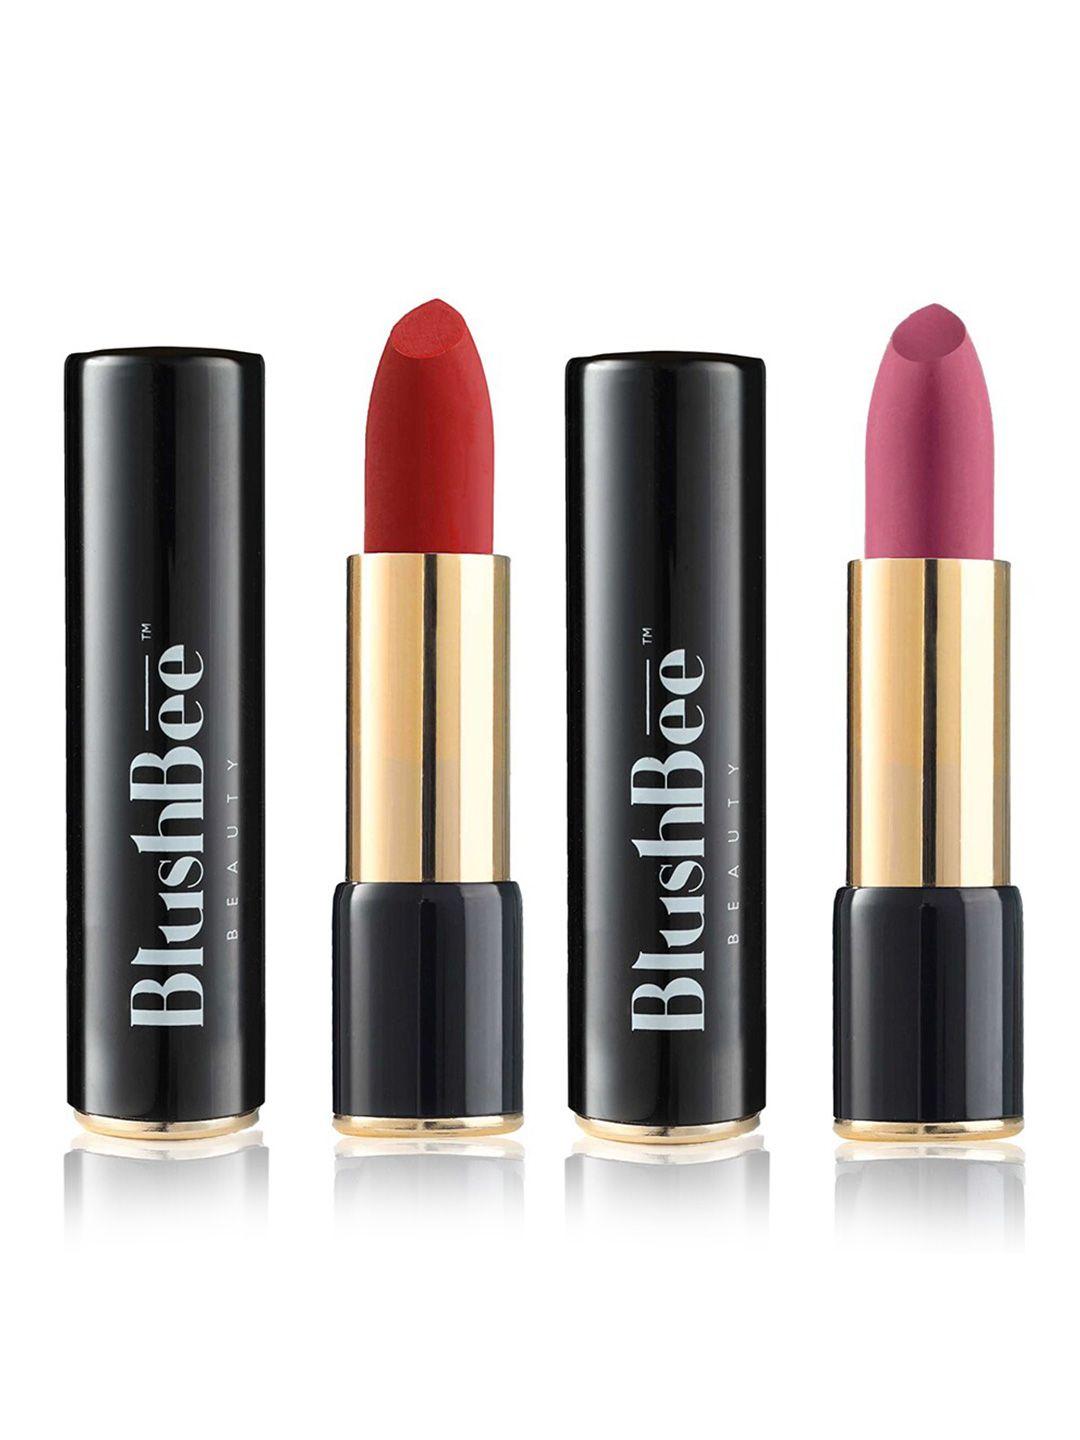 blushbee beauty set of 2 lip nourishing lipsticks - party red bb01 & mystic mauve bb04